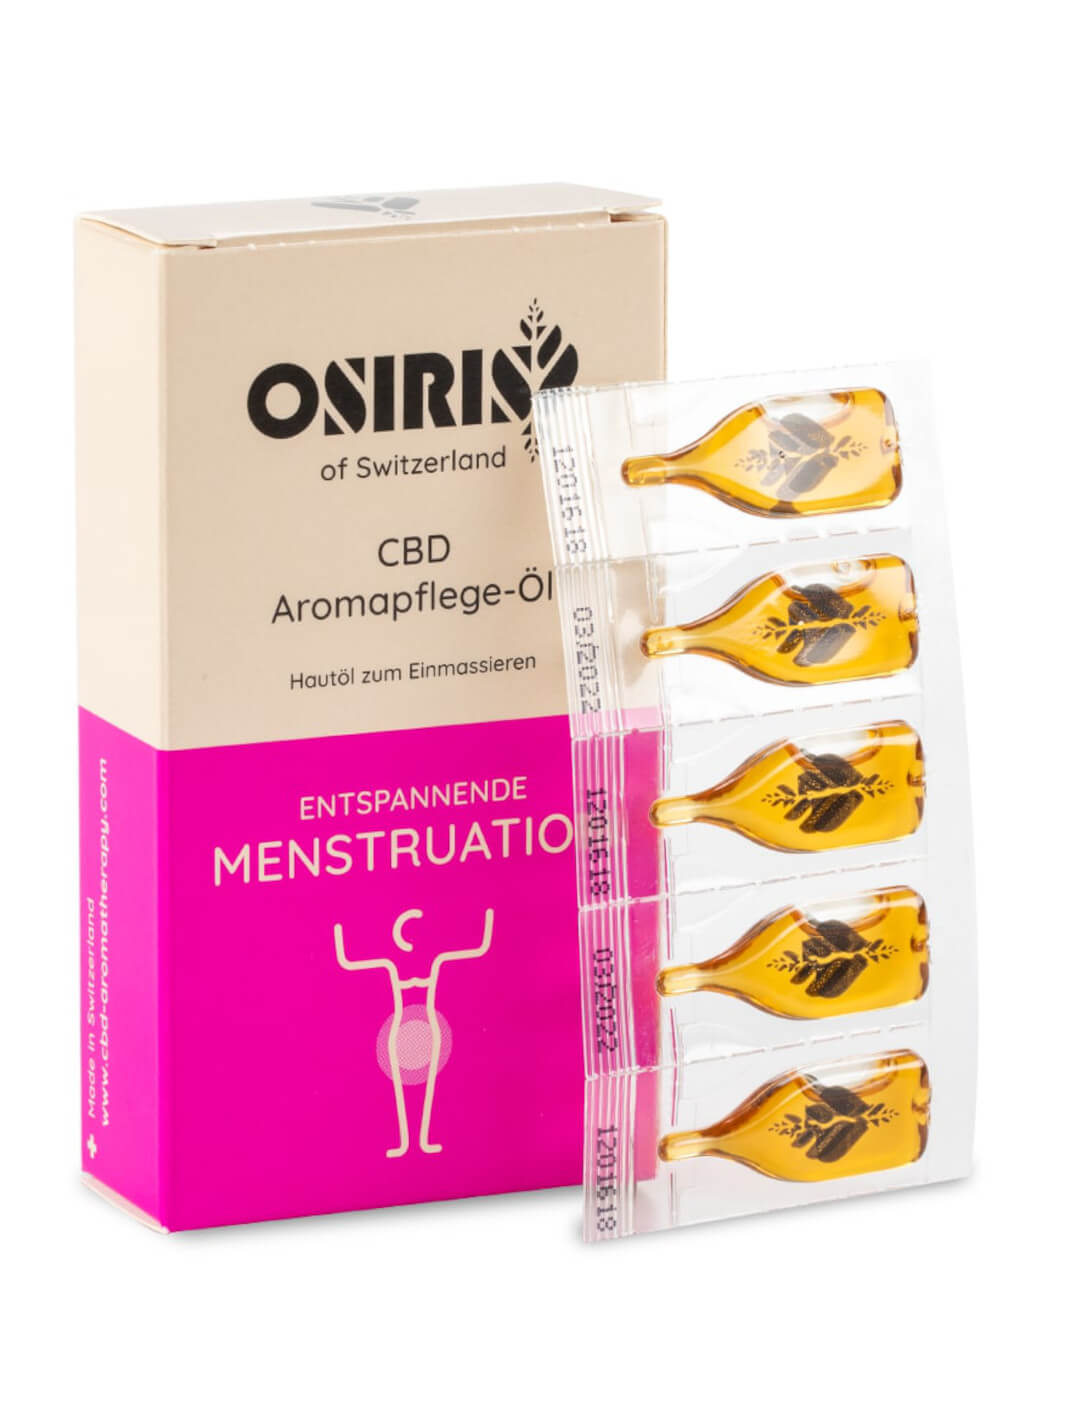 CBD Aromapflege-Öl entspannte Menstruation